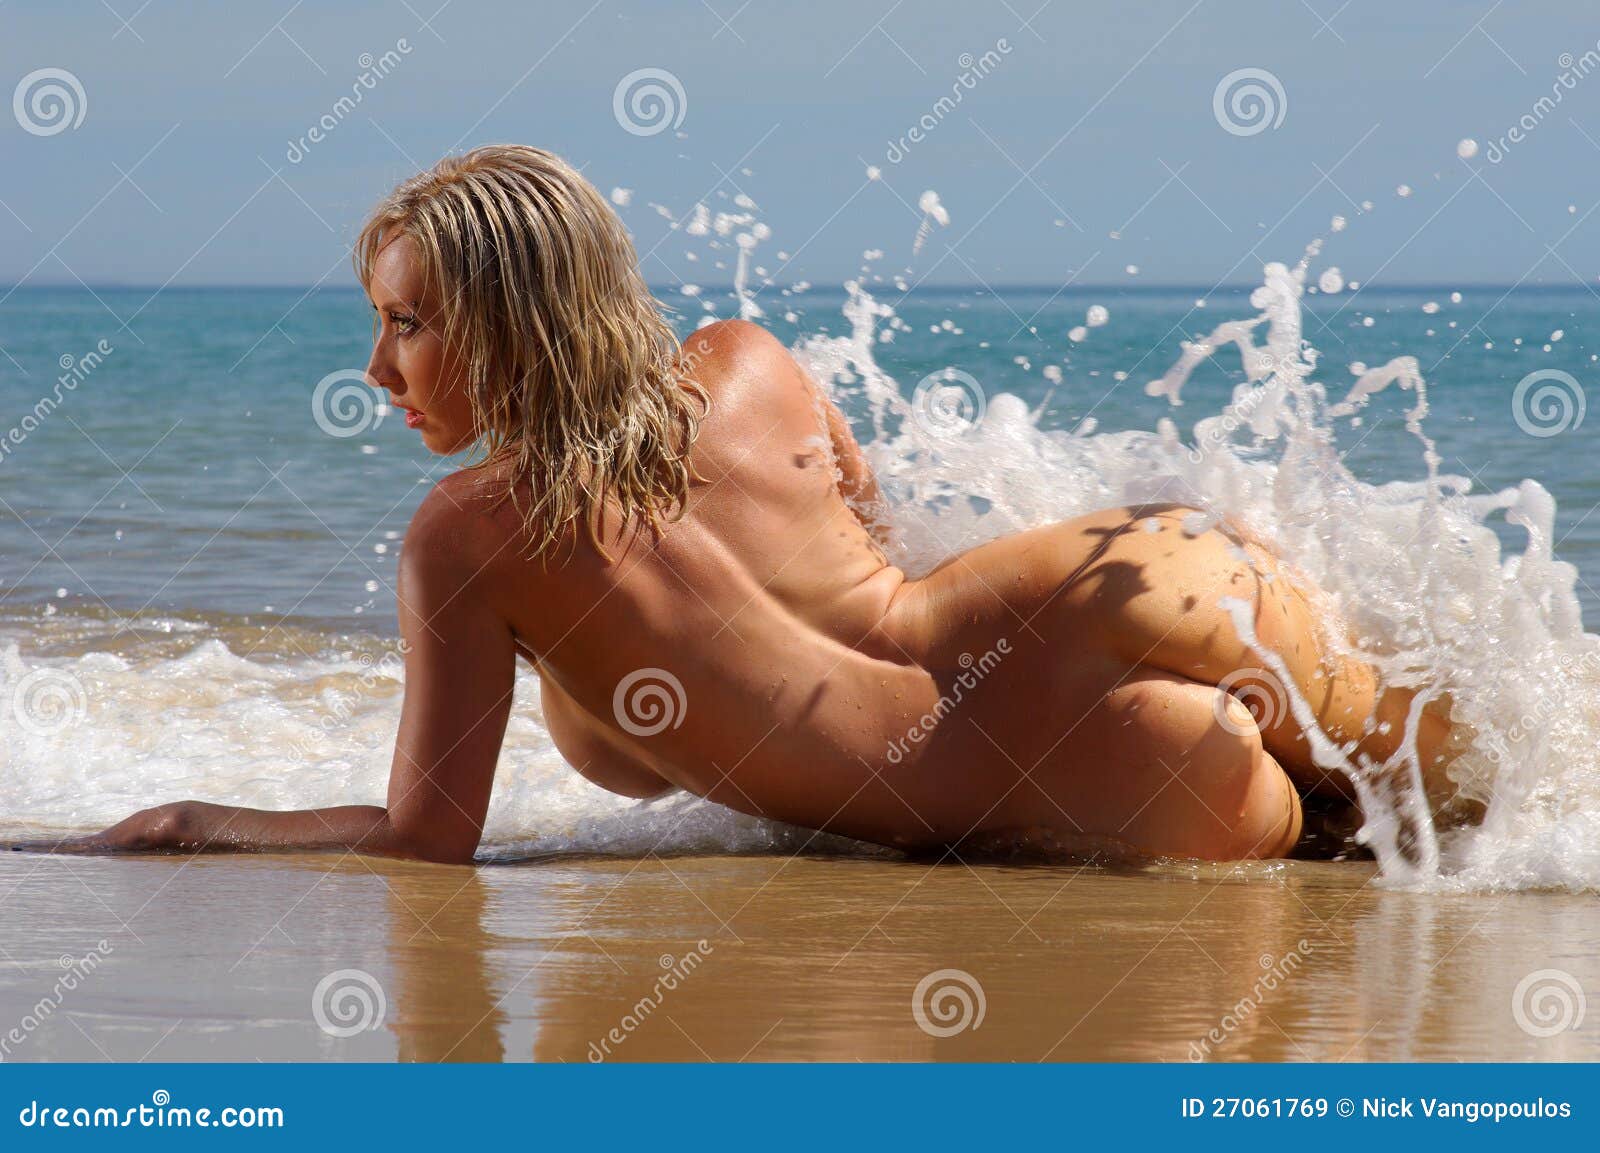 nude sexy girls in beach hd pic